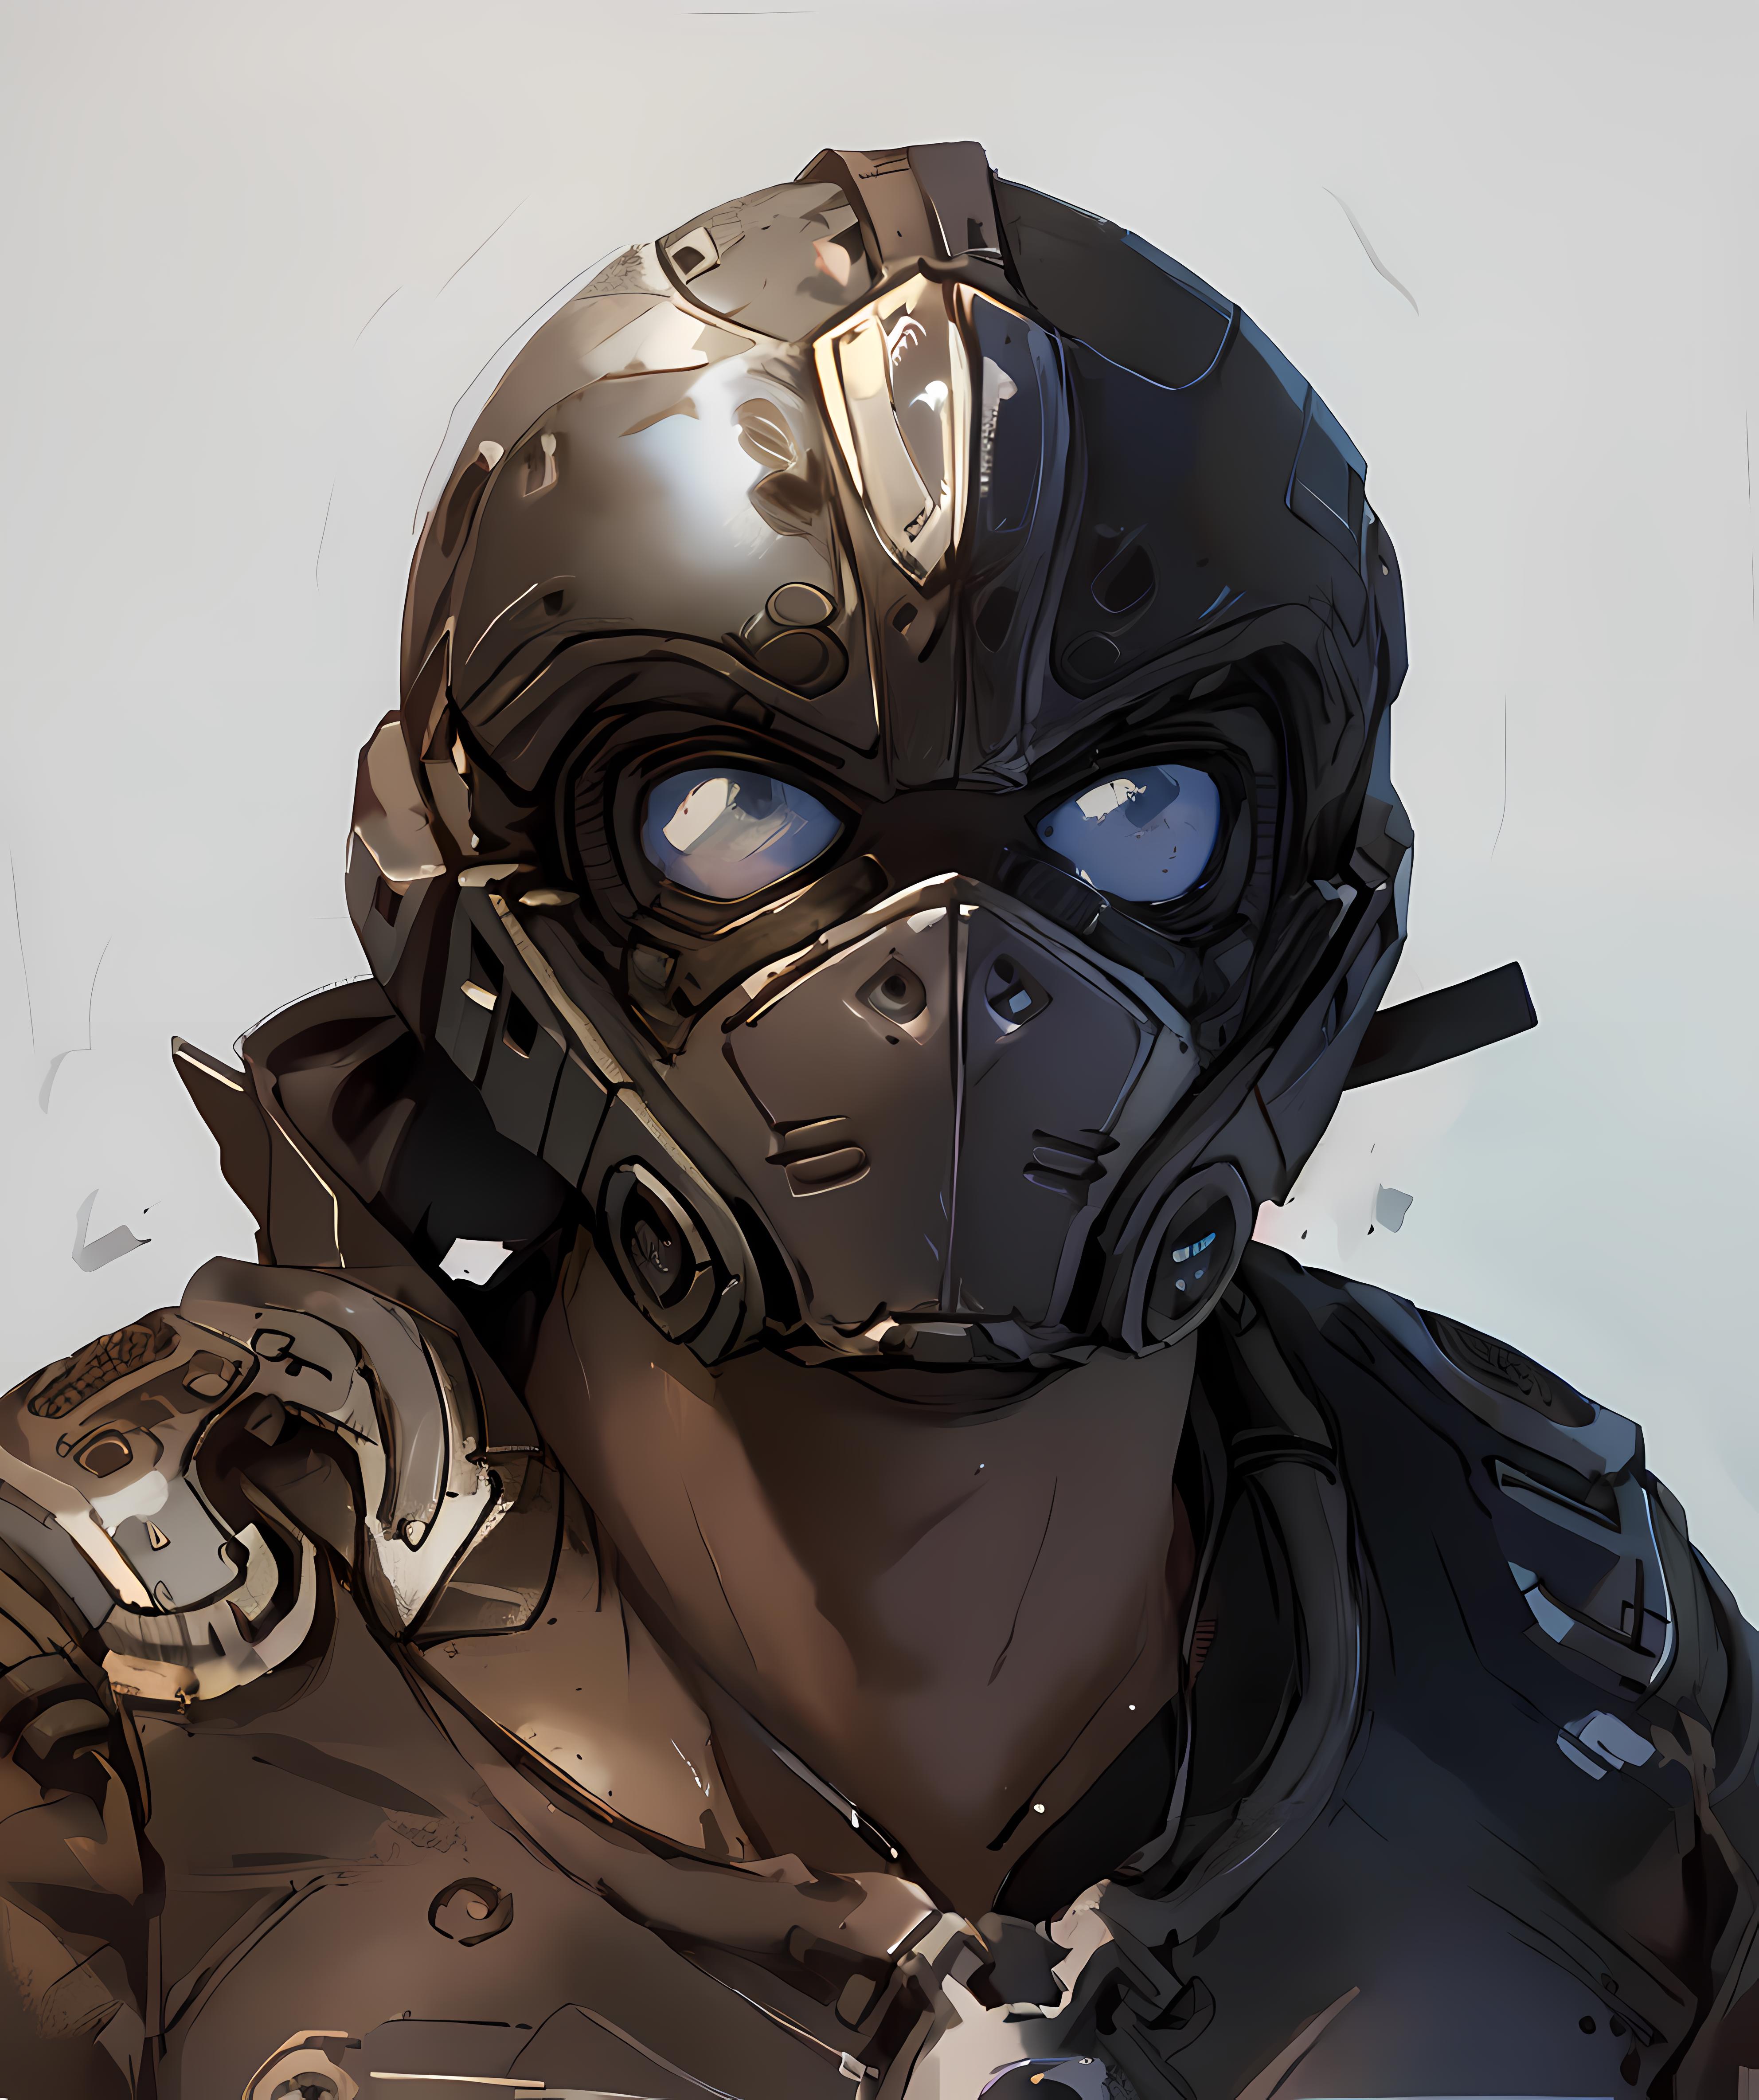 Clayton Carmine | Gears of War image by doomguy11111